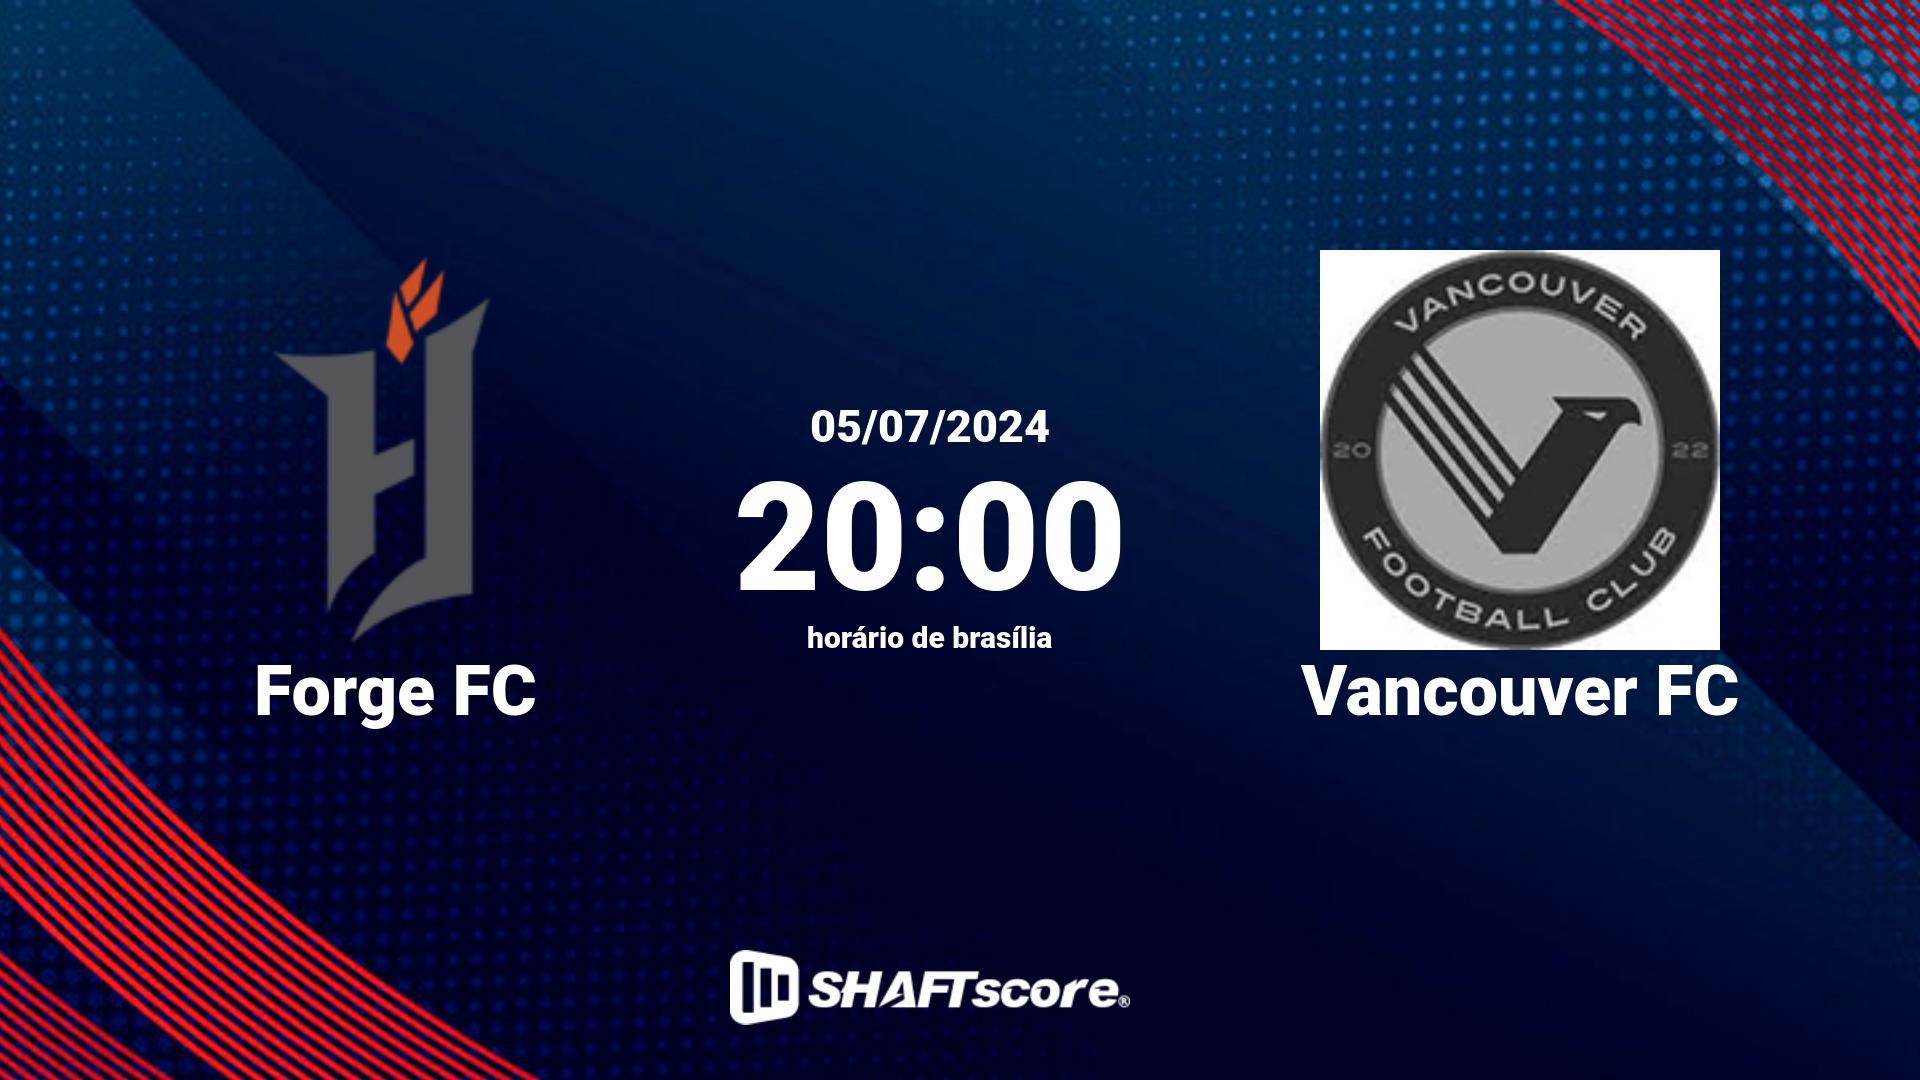 Estatísticas do jogo Forge FC vs Vancouver FC 05.07 20:00